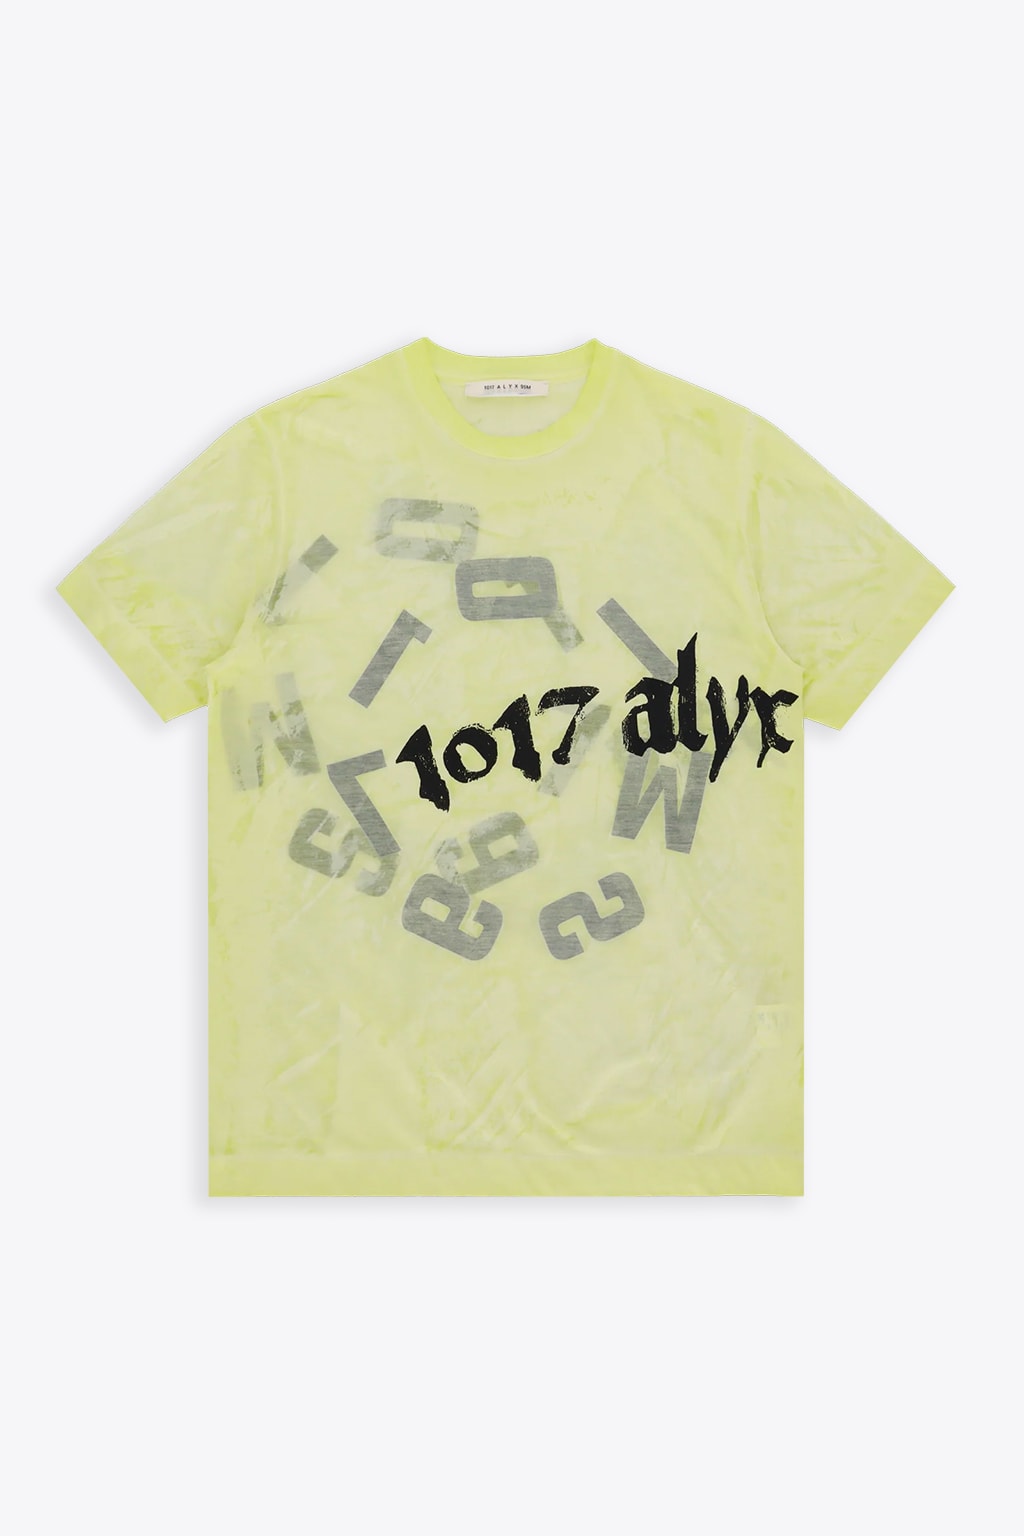 Translucent Graphic S/s T-shirt Neon Yellow Cotton Translucent T-shirt - Translucent Graphic S/s T-shirt